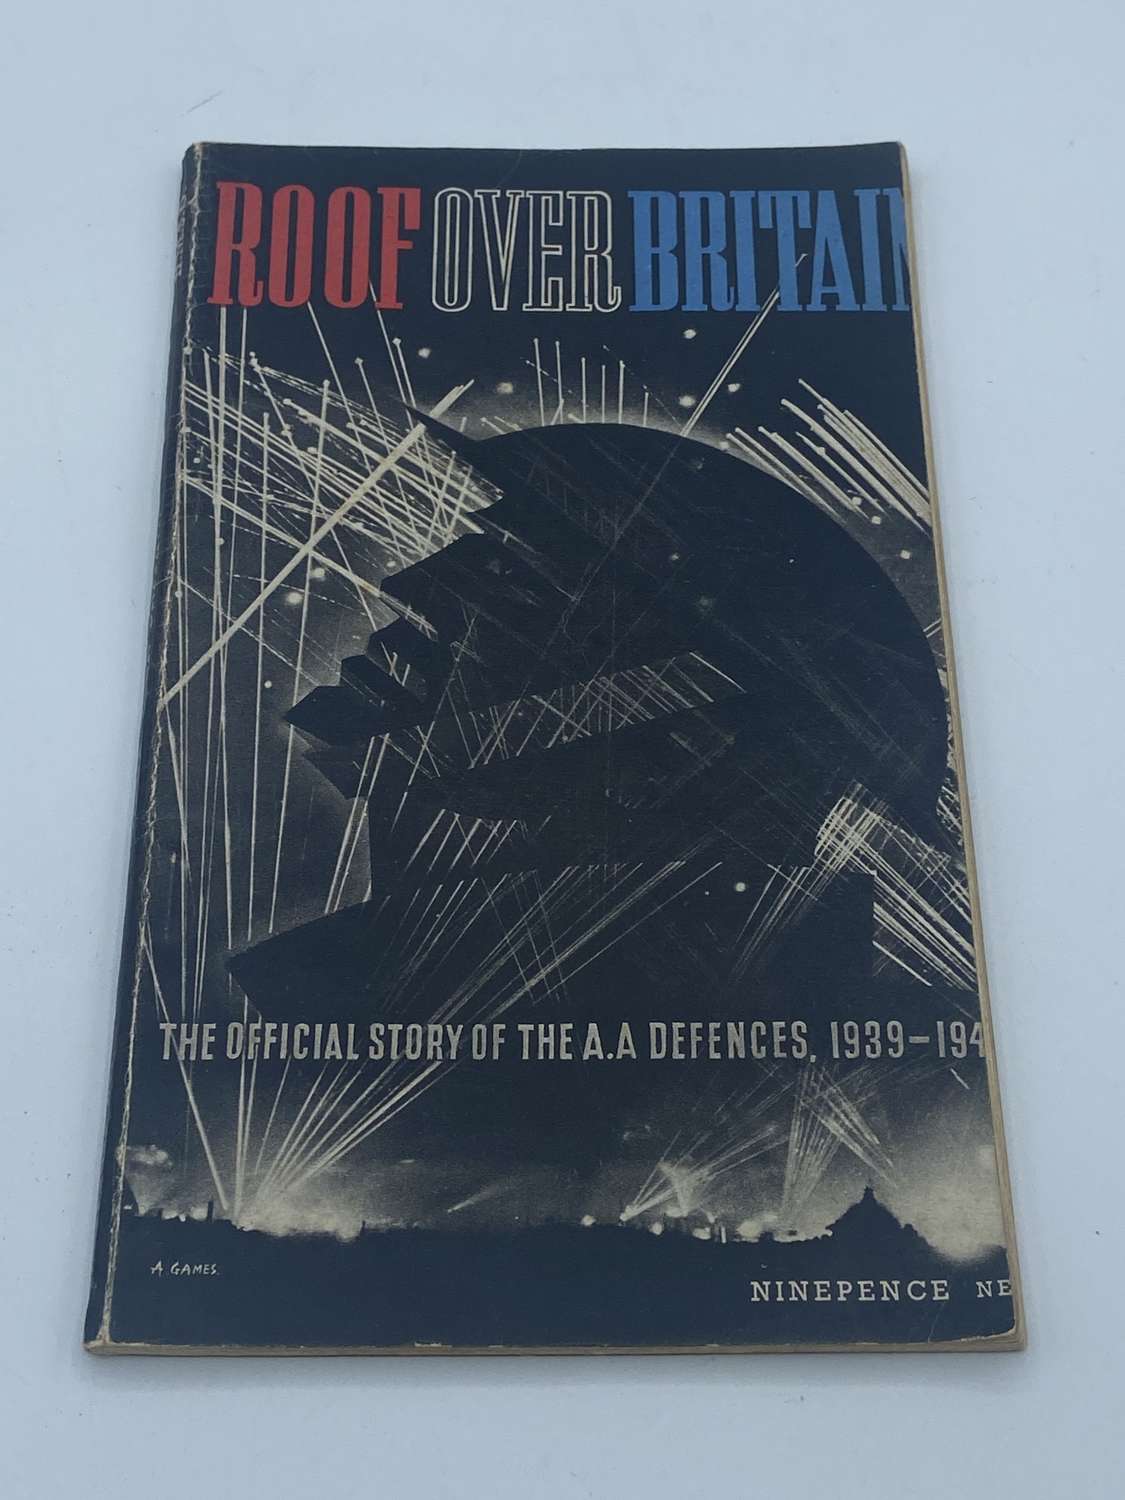 WW2 1943 Home Front Roof Over Britain Propaganda Book